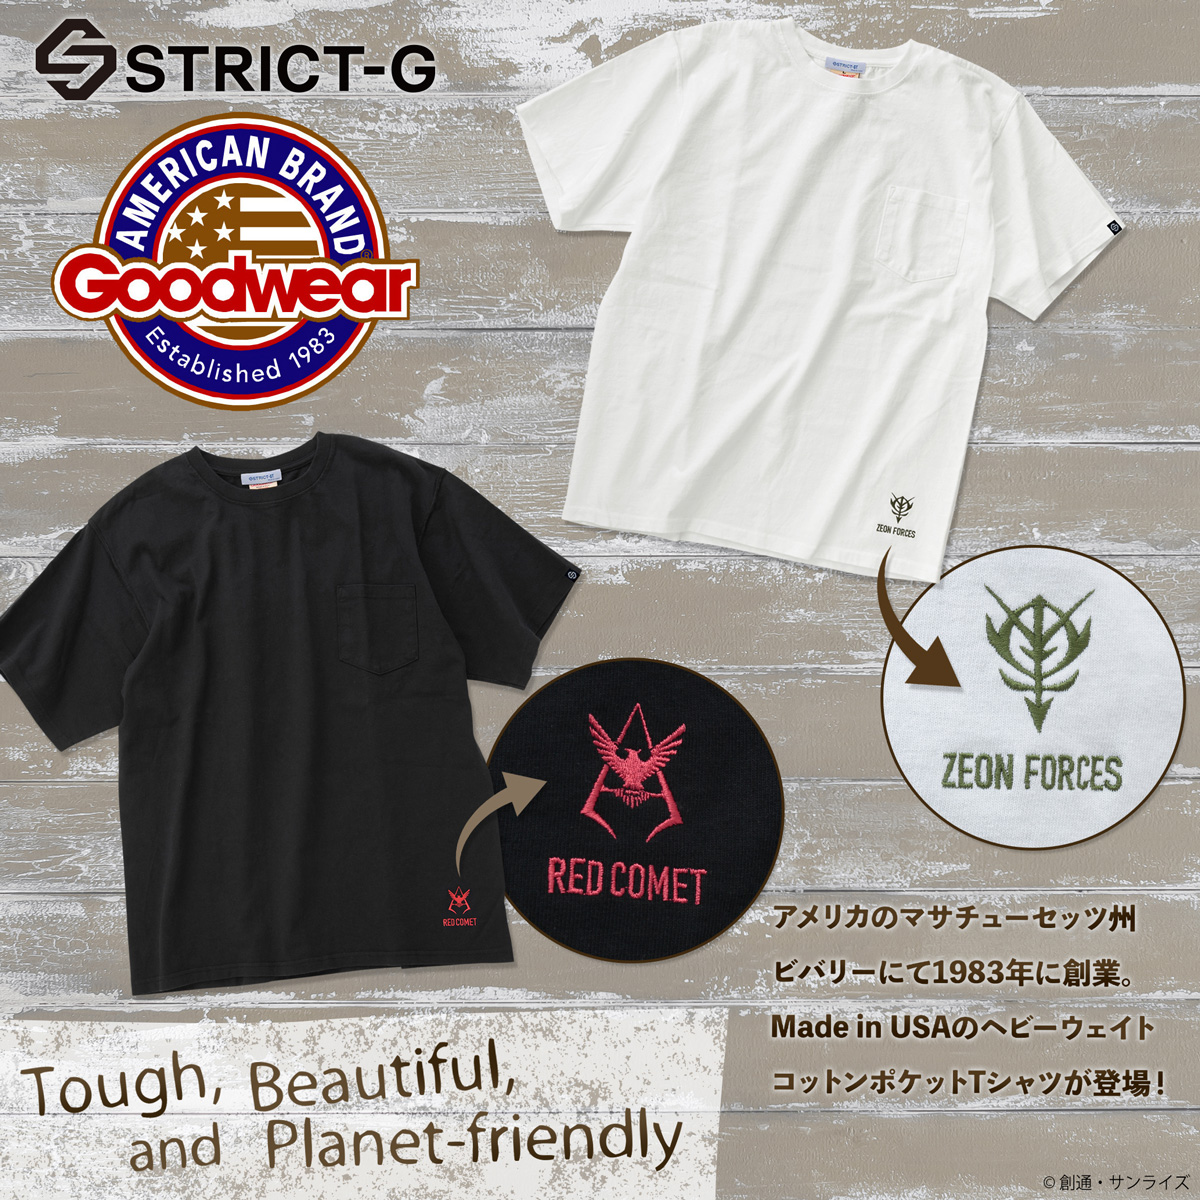 STRICT-G Goodwear『機動戦士ガンダム』 ポケットTシャツ ZEON